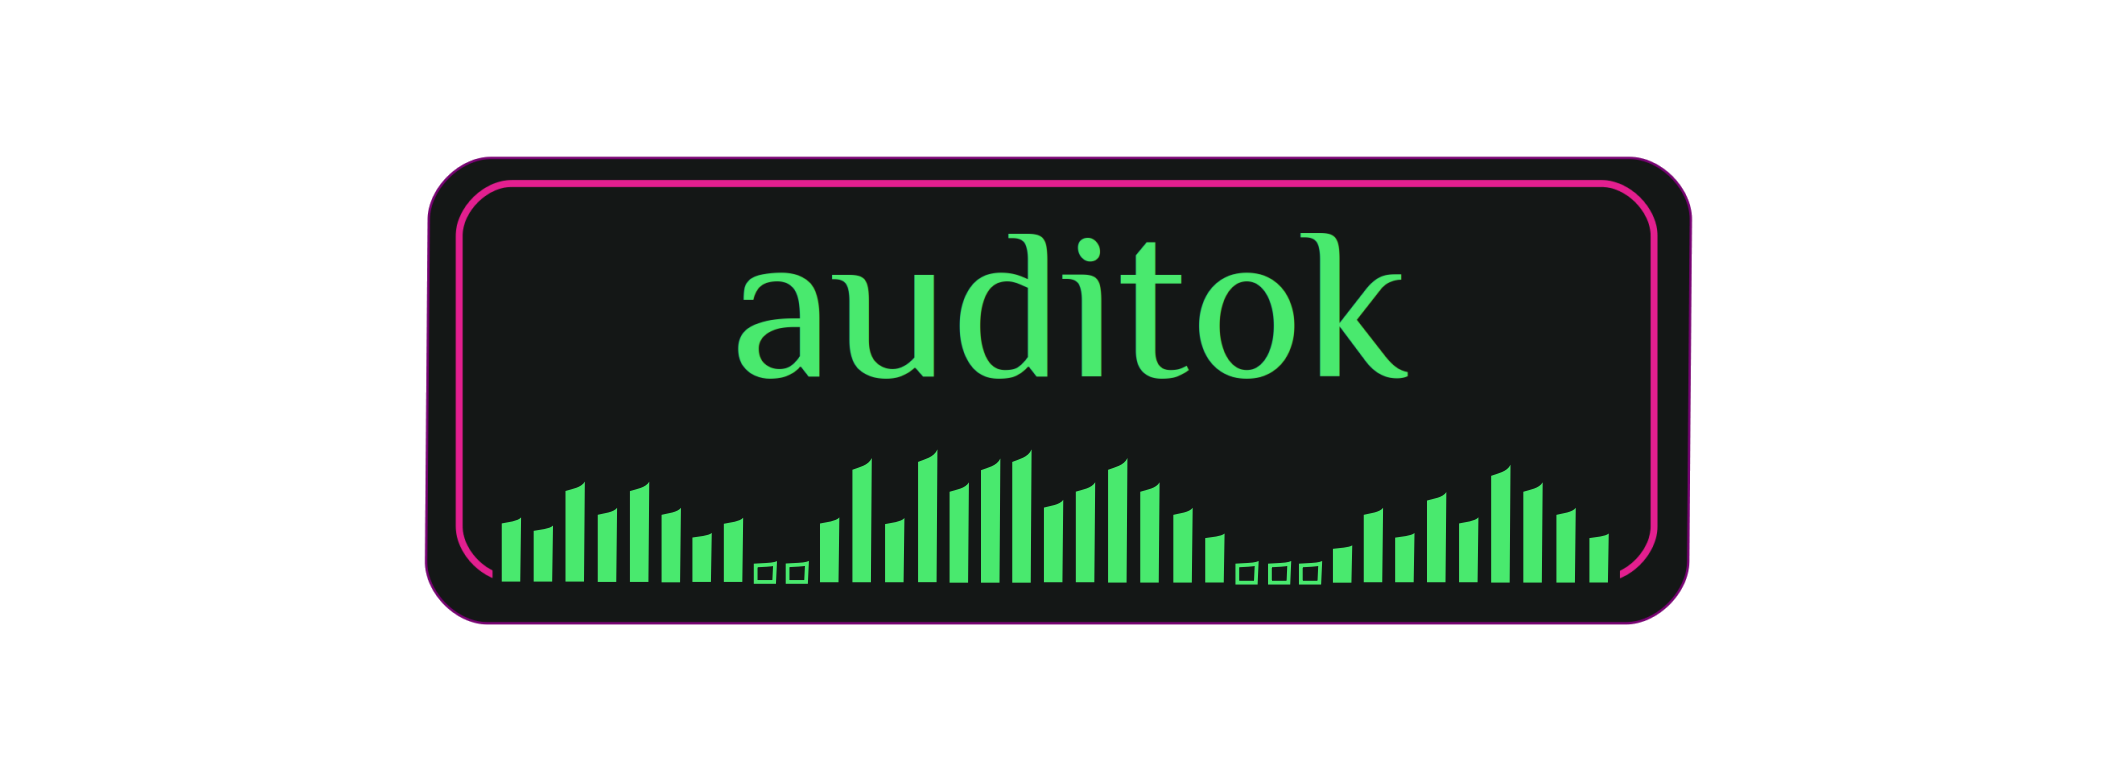 https://github.com/amsehili/auditok/raw/master/doc/figures/auditok-logo.png